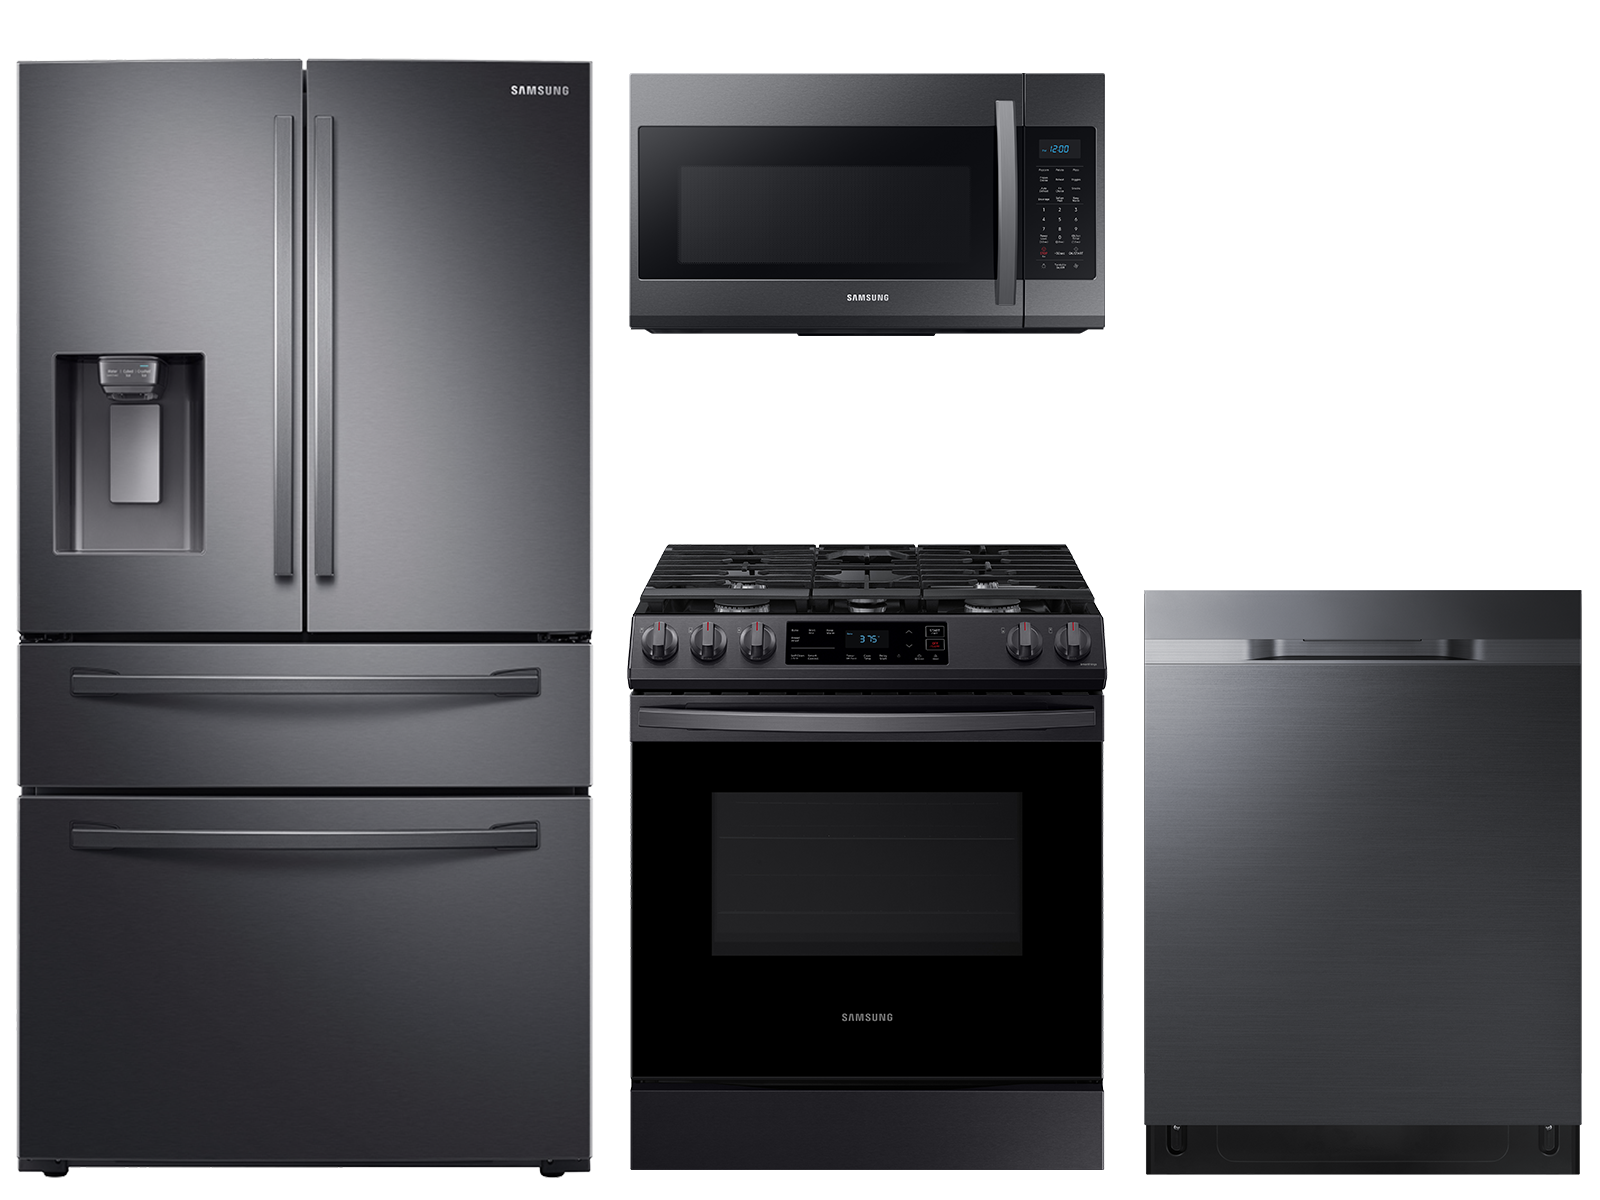 Samsung 28 cu. ft. 4-door refrigerator, gas range, microwave and 48 dBA dishwasher package(BNDL-1614026233832)